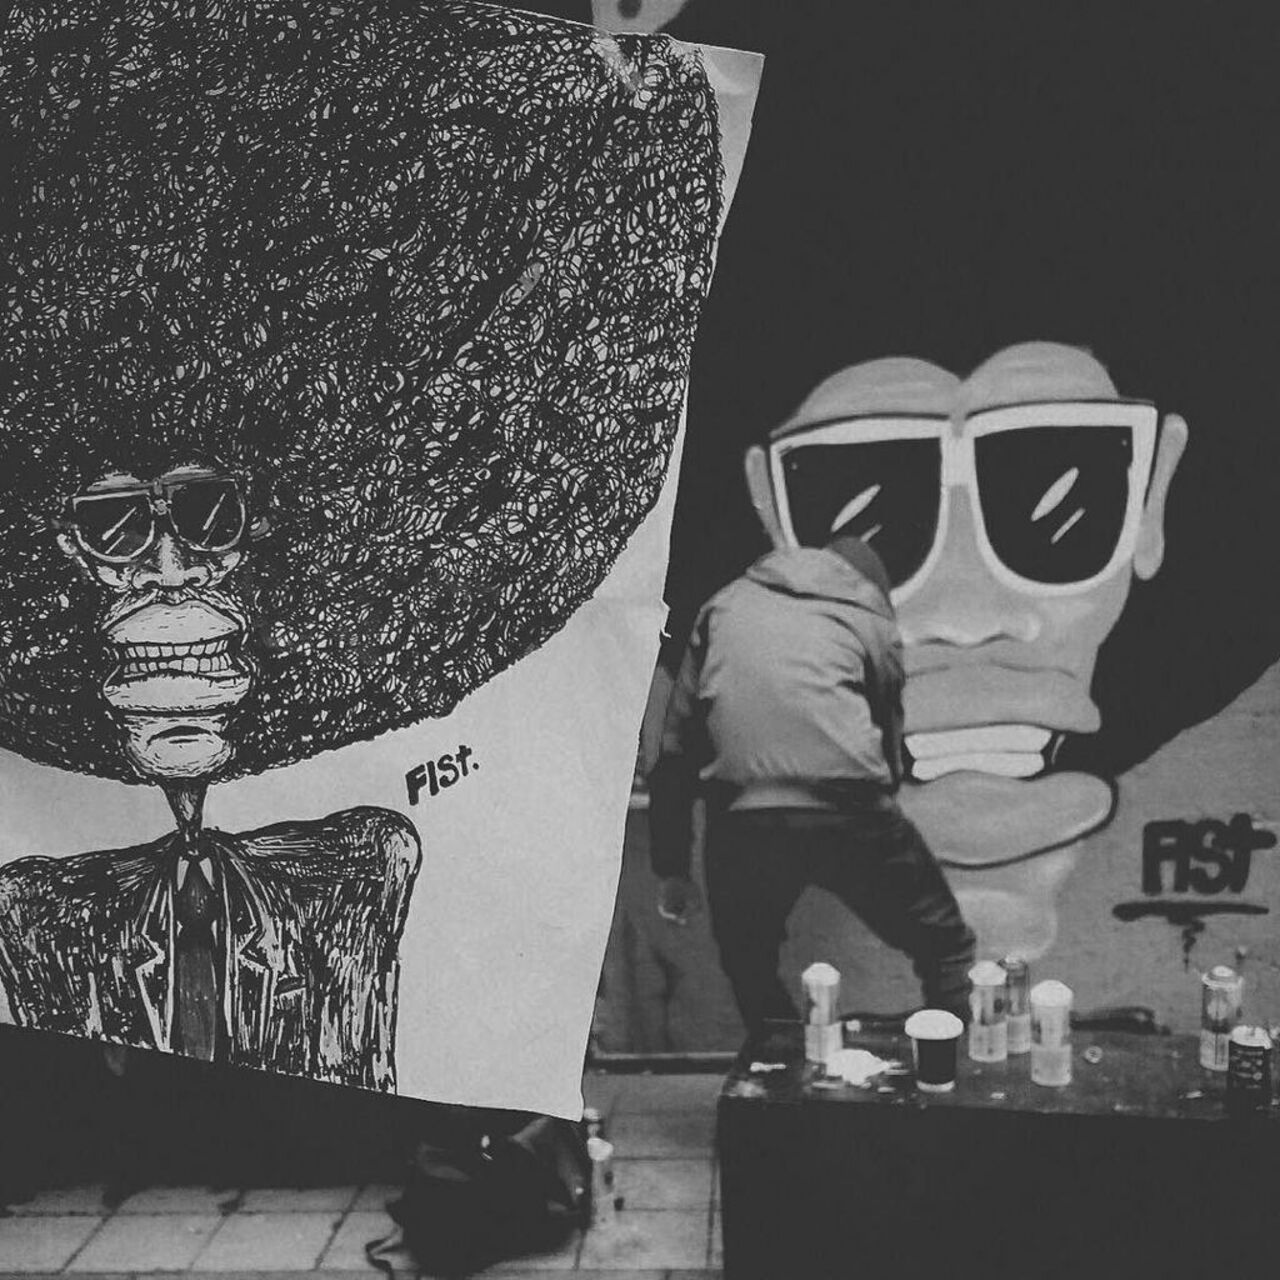 making of afro | #graffiti #streetart #istanbulstreetart #streetartistanbul #wfist #fist by wfist https://t.co/gCX8J3xhUu